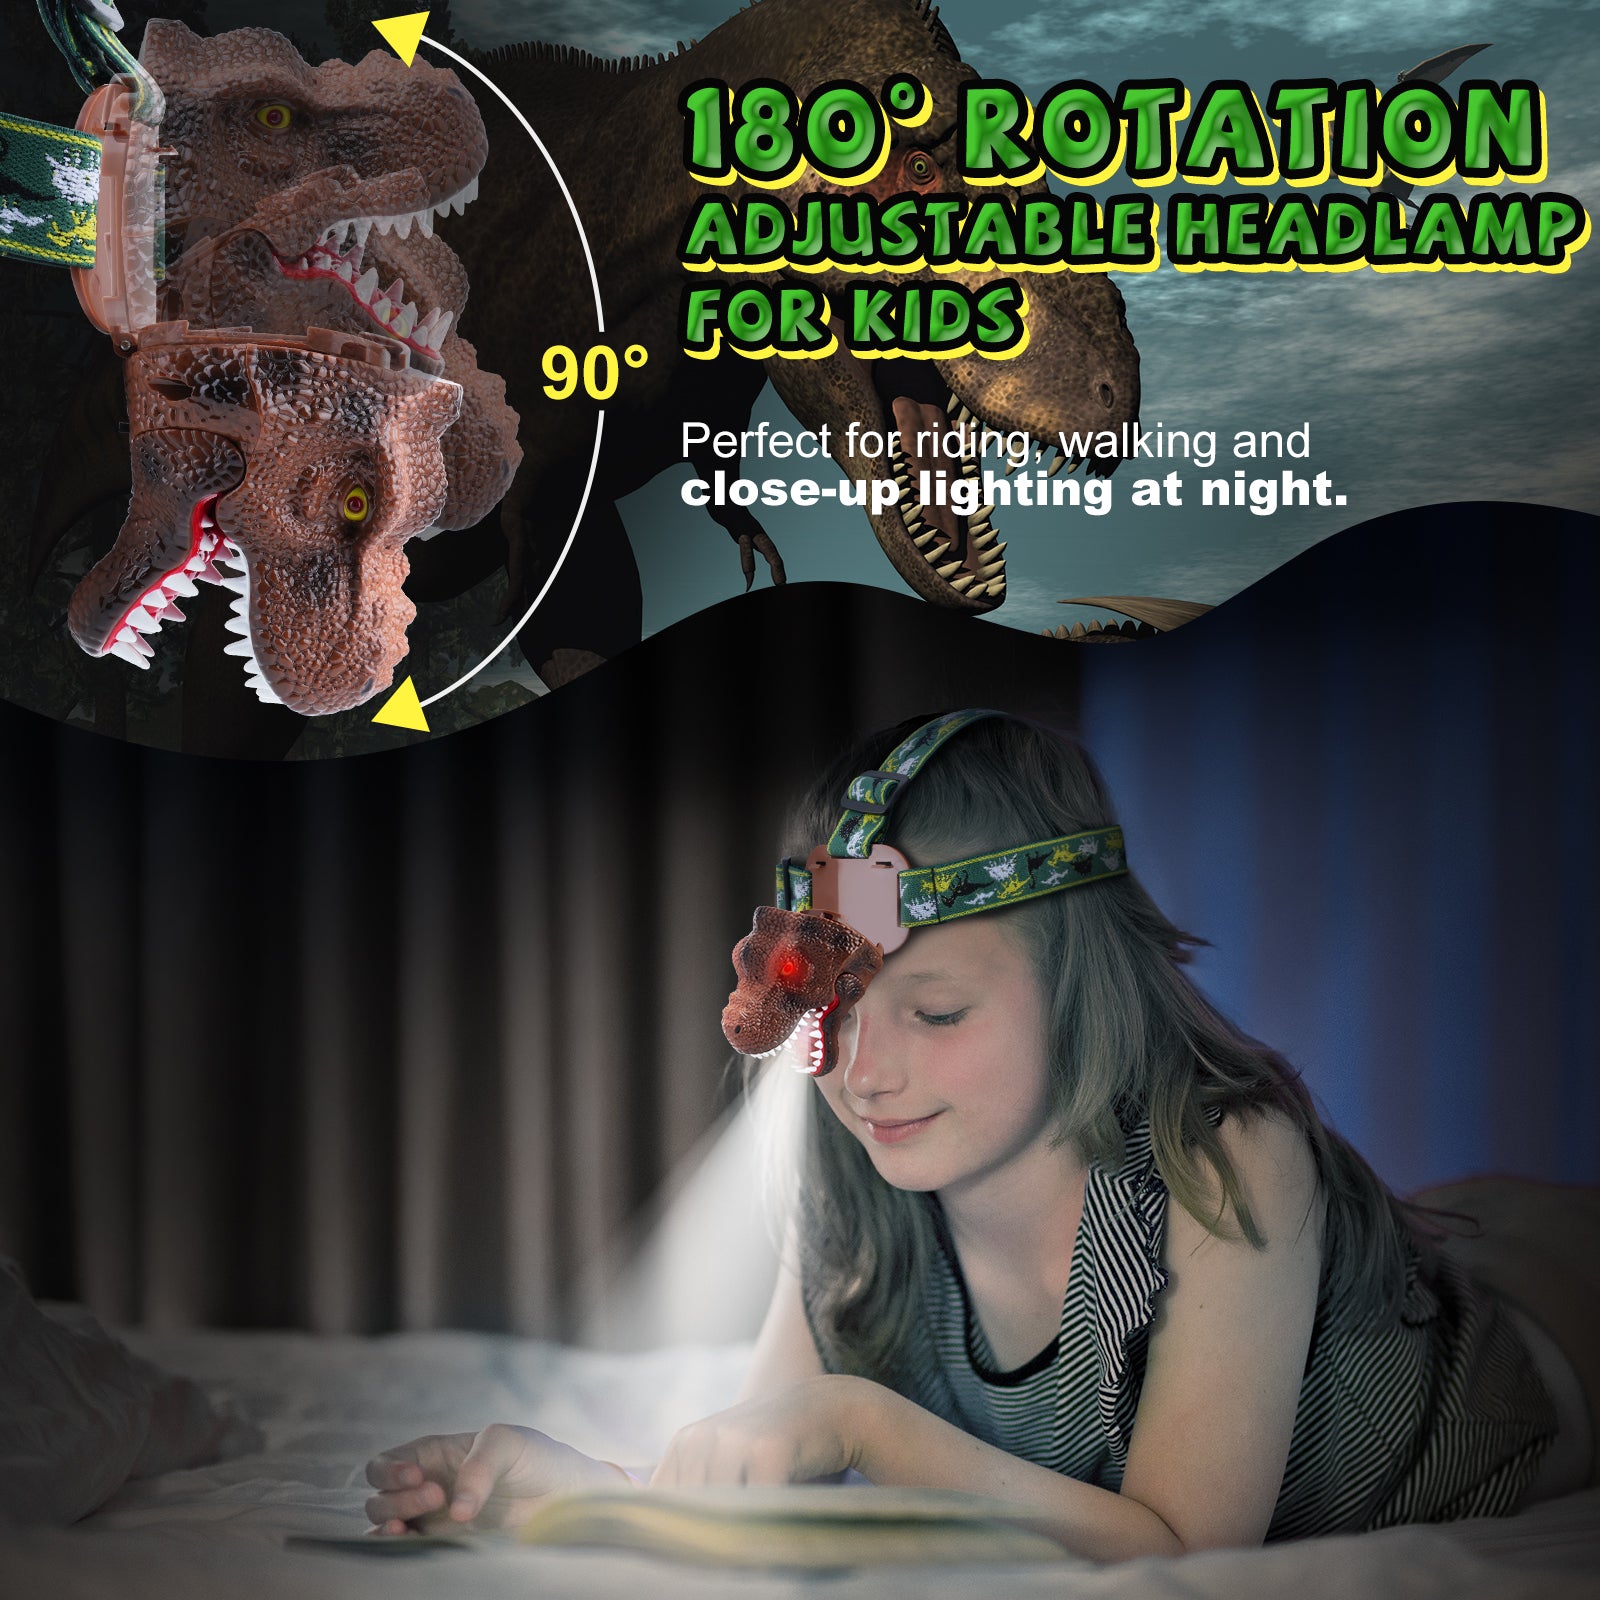 t rex headlamp with adjustable headband